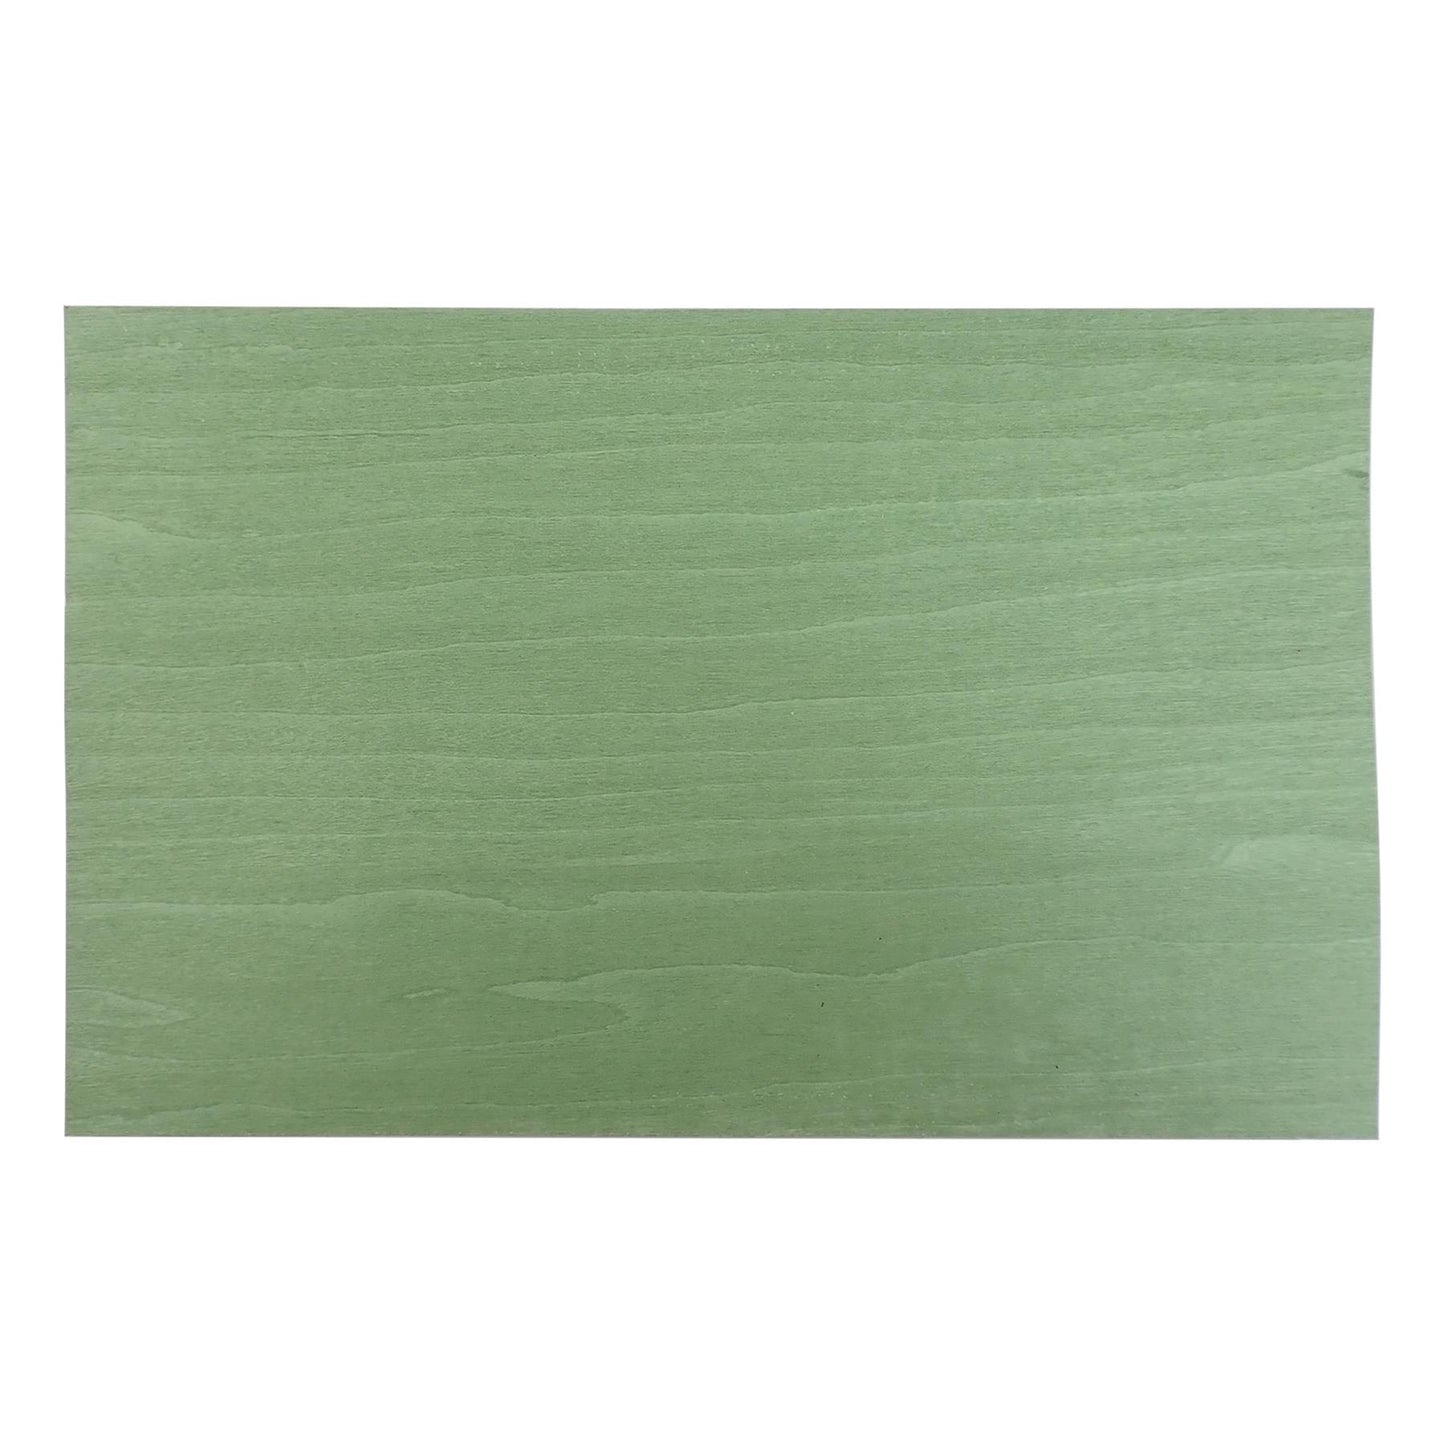 Incudo Green Maple Dyed Wood Veneer - 300x210x0.45mm